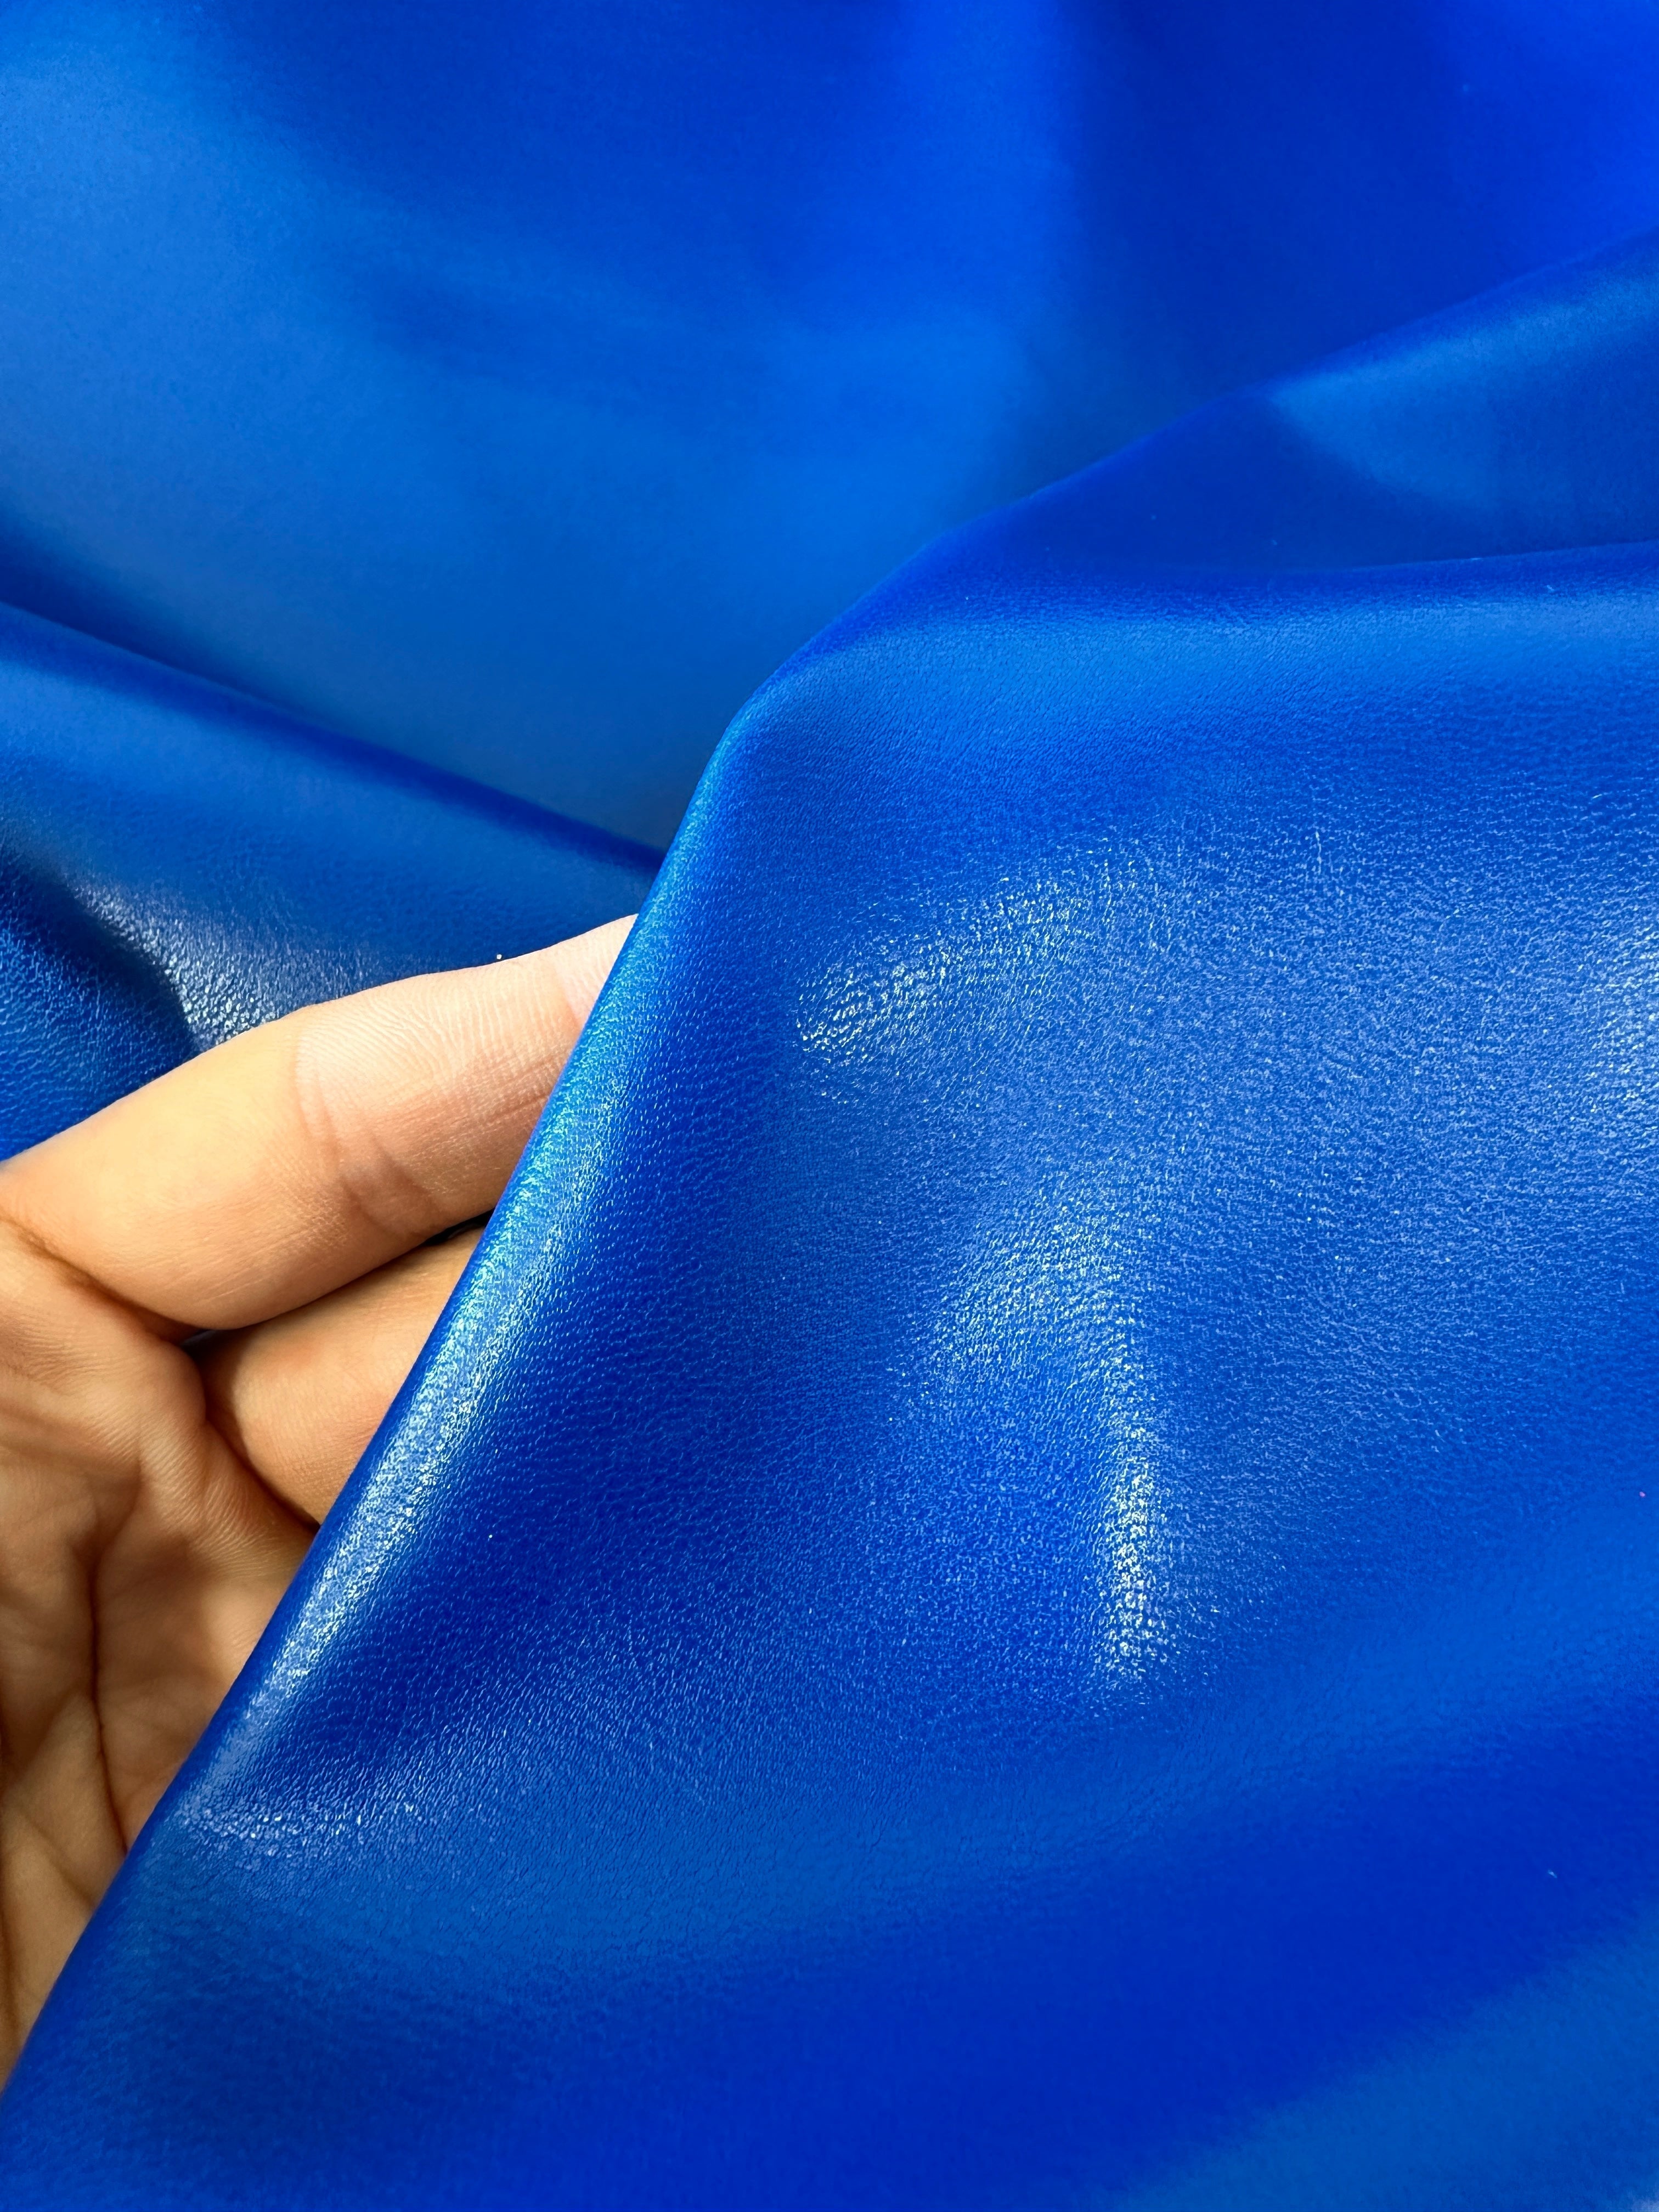 royal blue Faux Leather, light blue faux leather, blue faux leather, dark blue faux leather for woman, faux leather for costumes, faux leather for home decor, 2 way stretch faux leather, leather for blazers, cheap leather, discounted leather, leather on sale